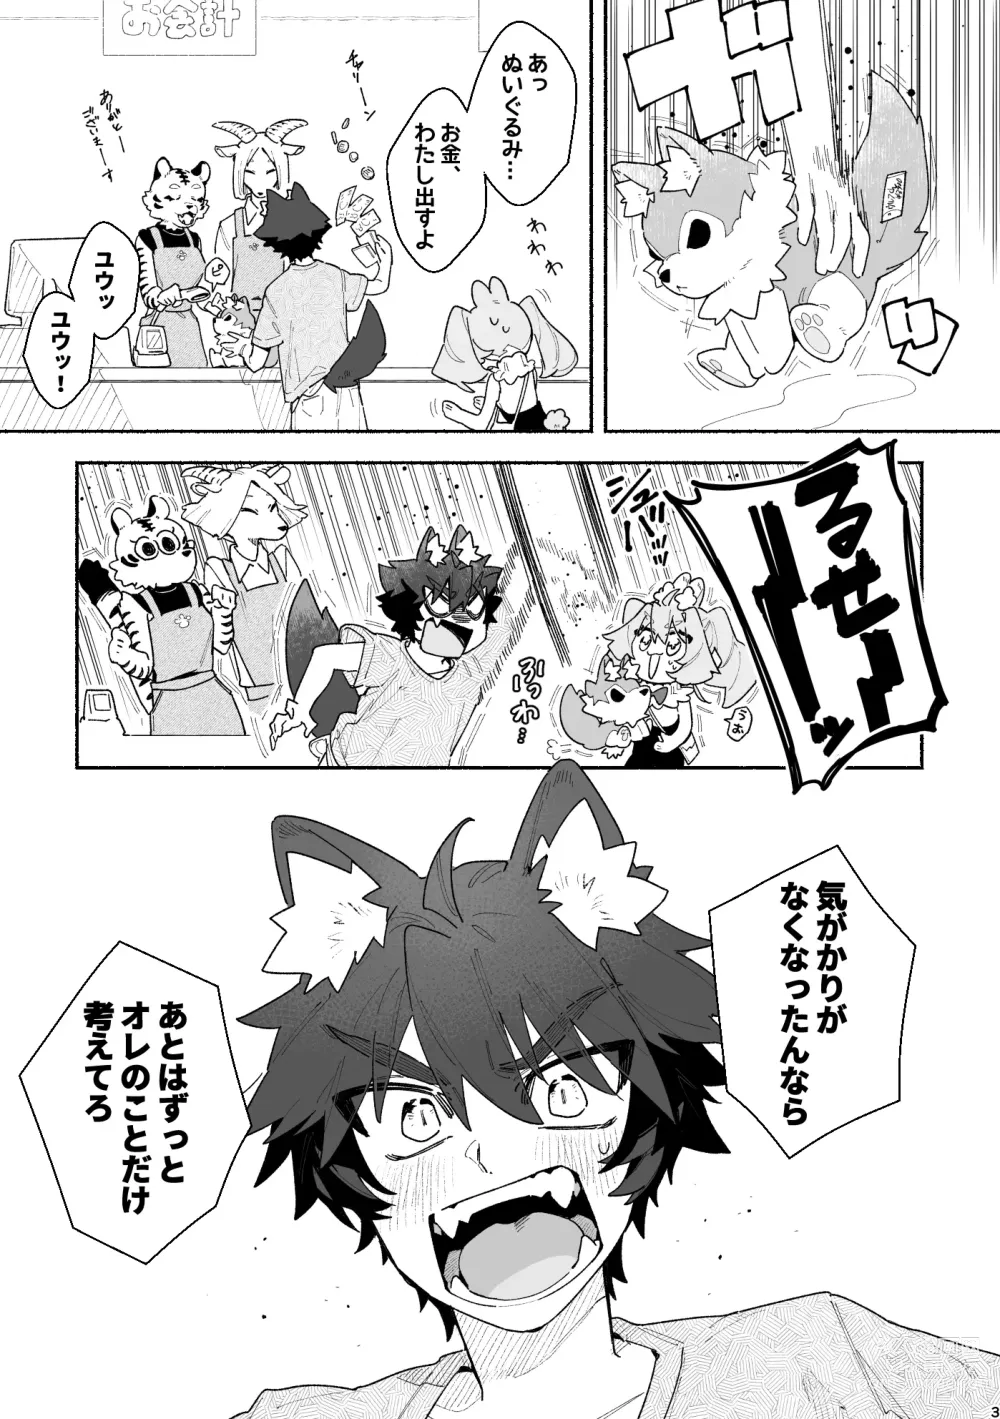 Page 46 of doujinshi ♂ ga Uke. Usagi-chan x Ookami-kun